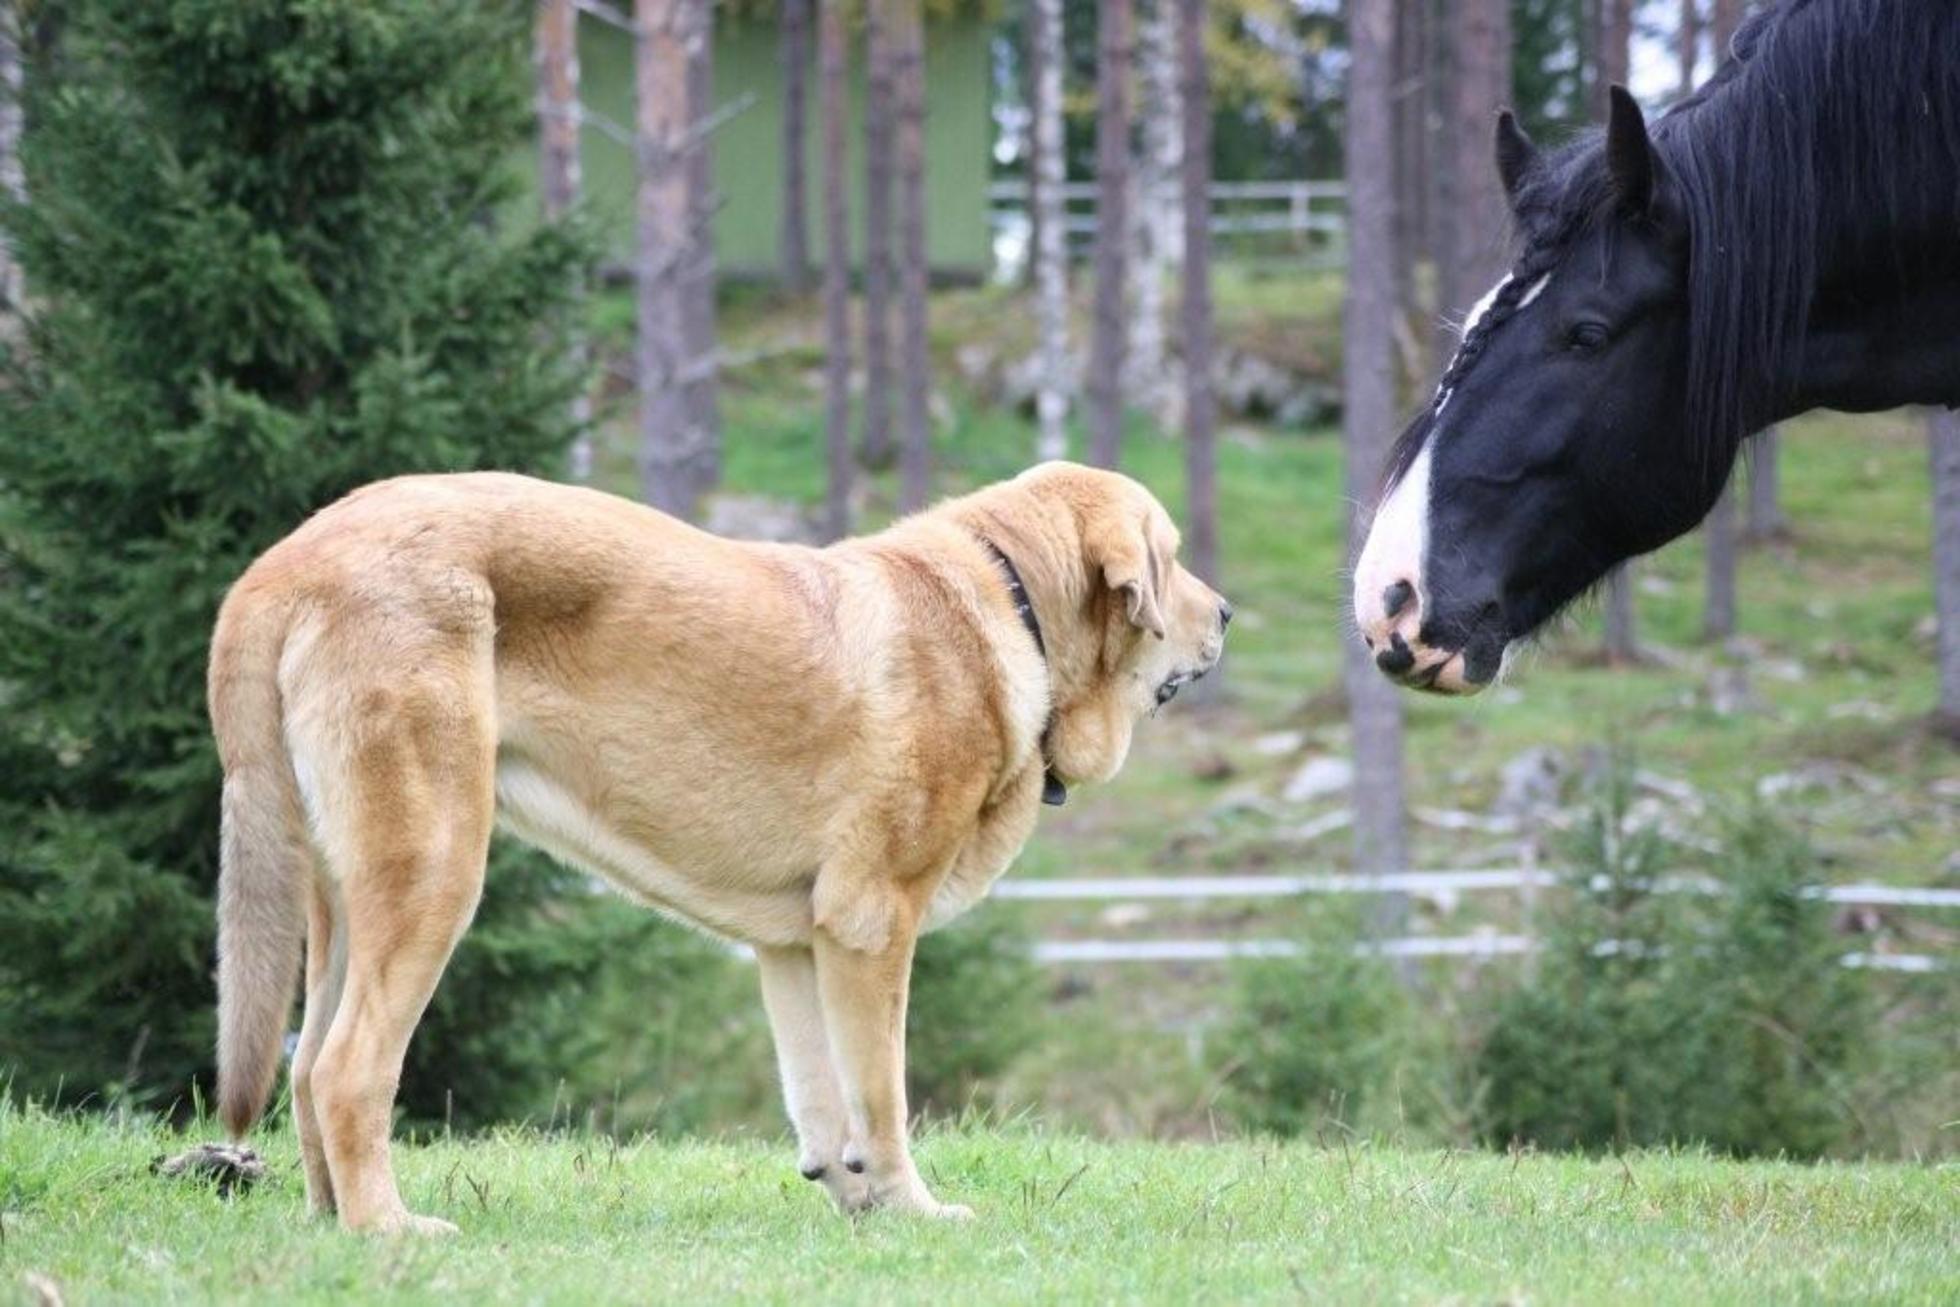 Spanish Mastiff dog and the horse photo and wallpaper. Beautiful